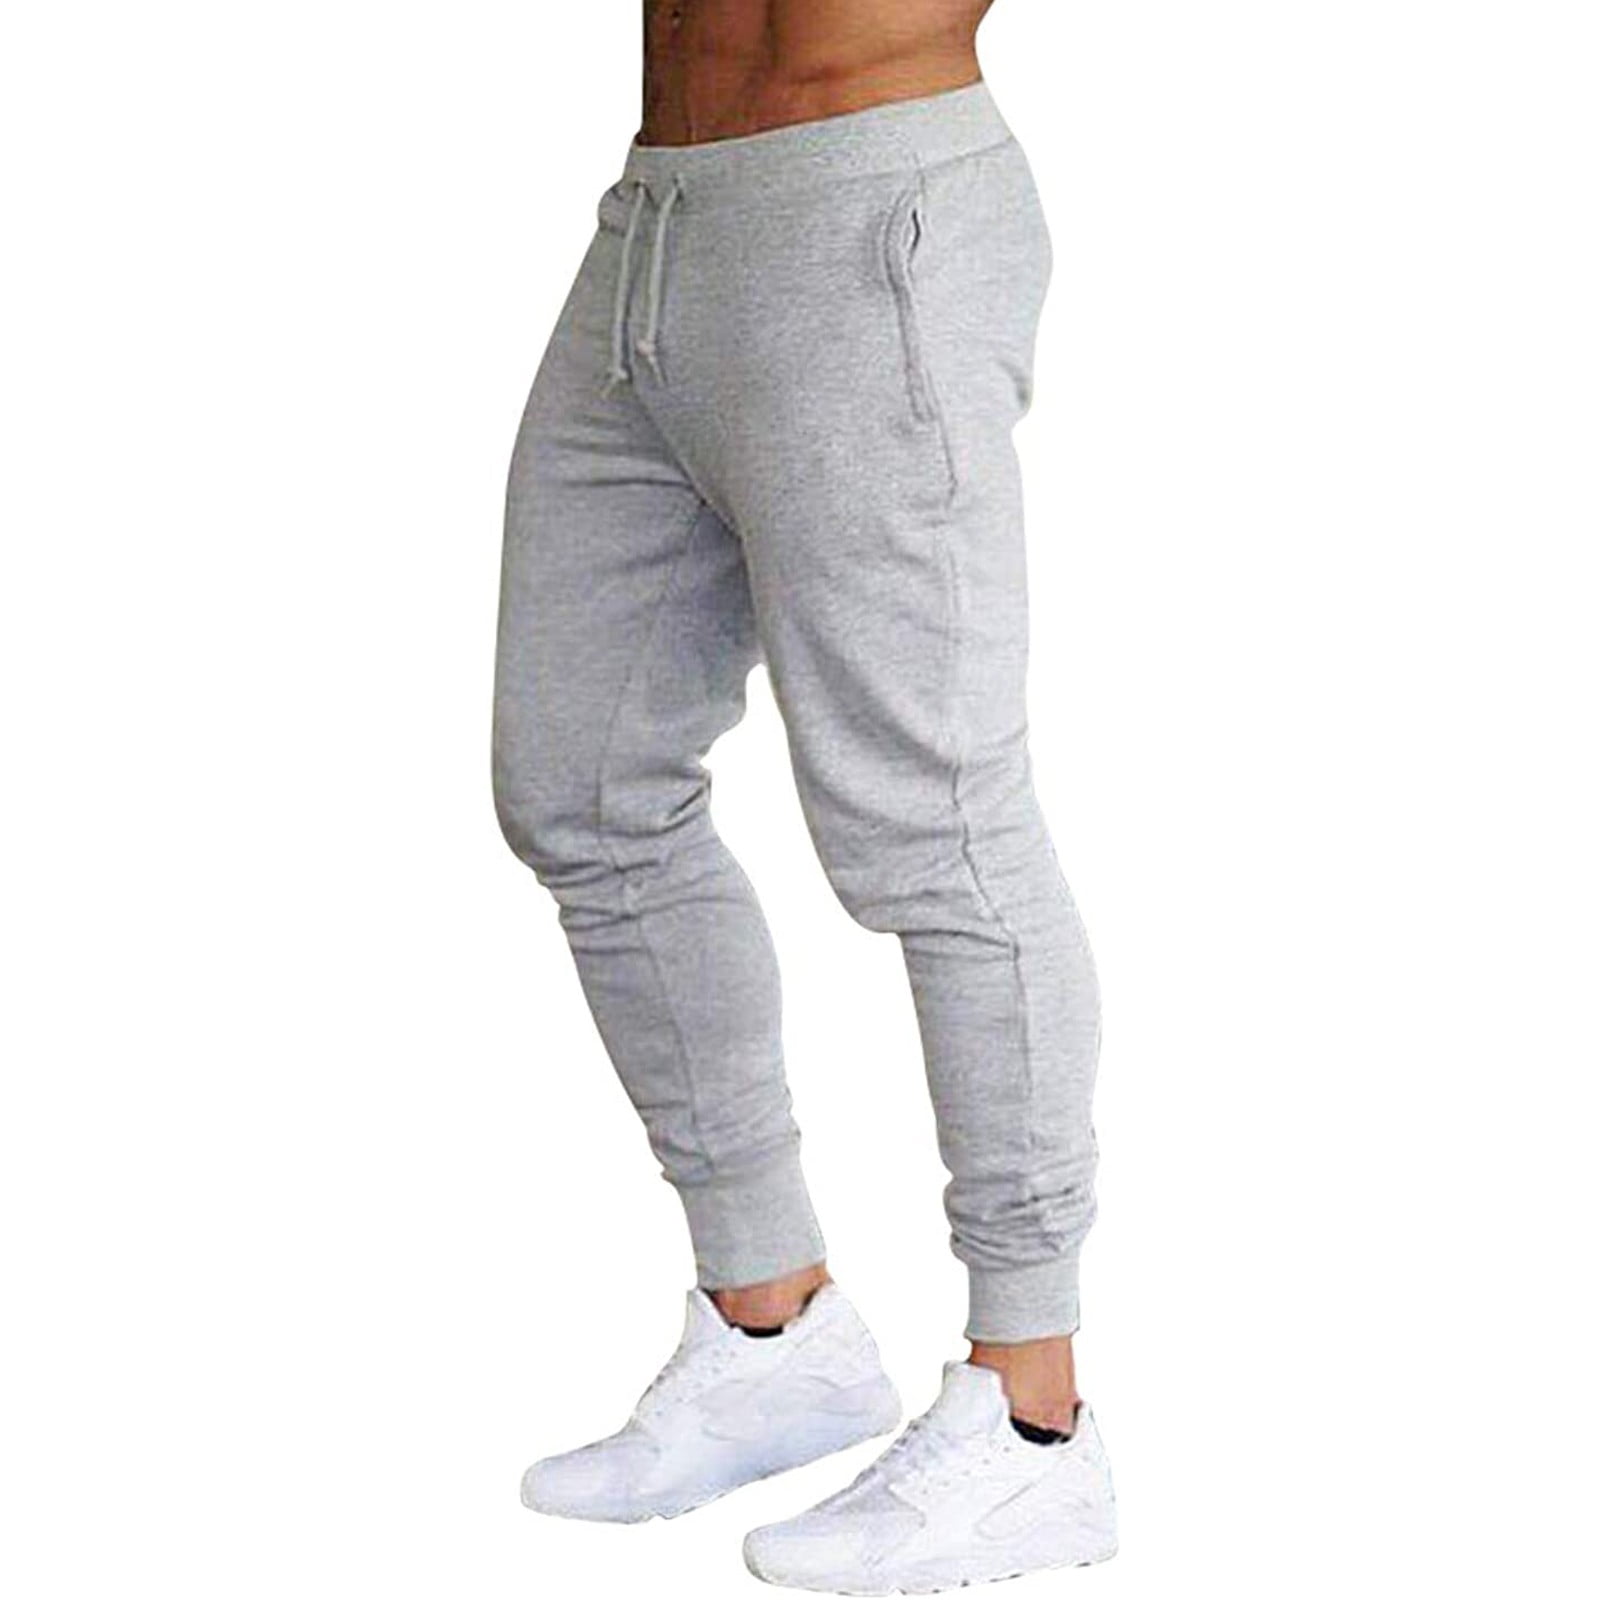 grey sweatpants men's workout active pants casual running